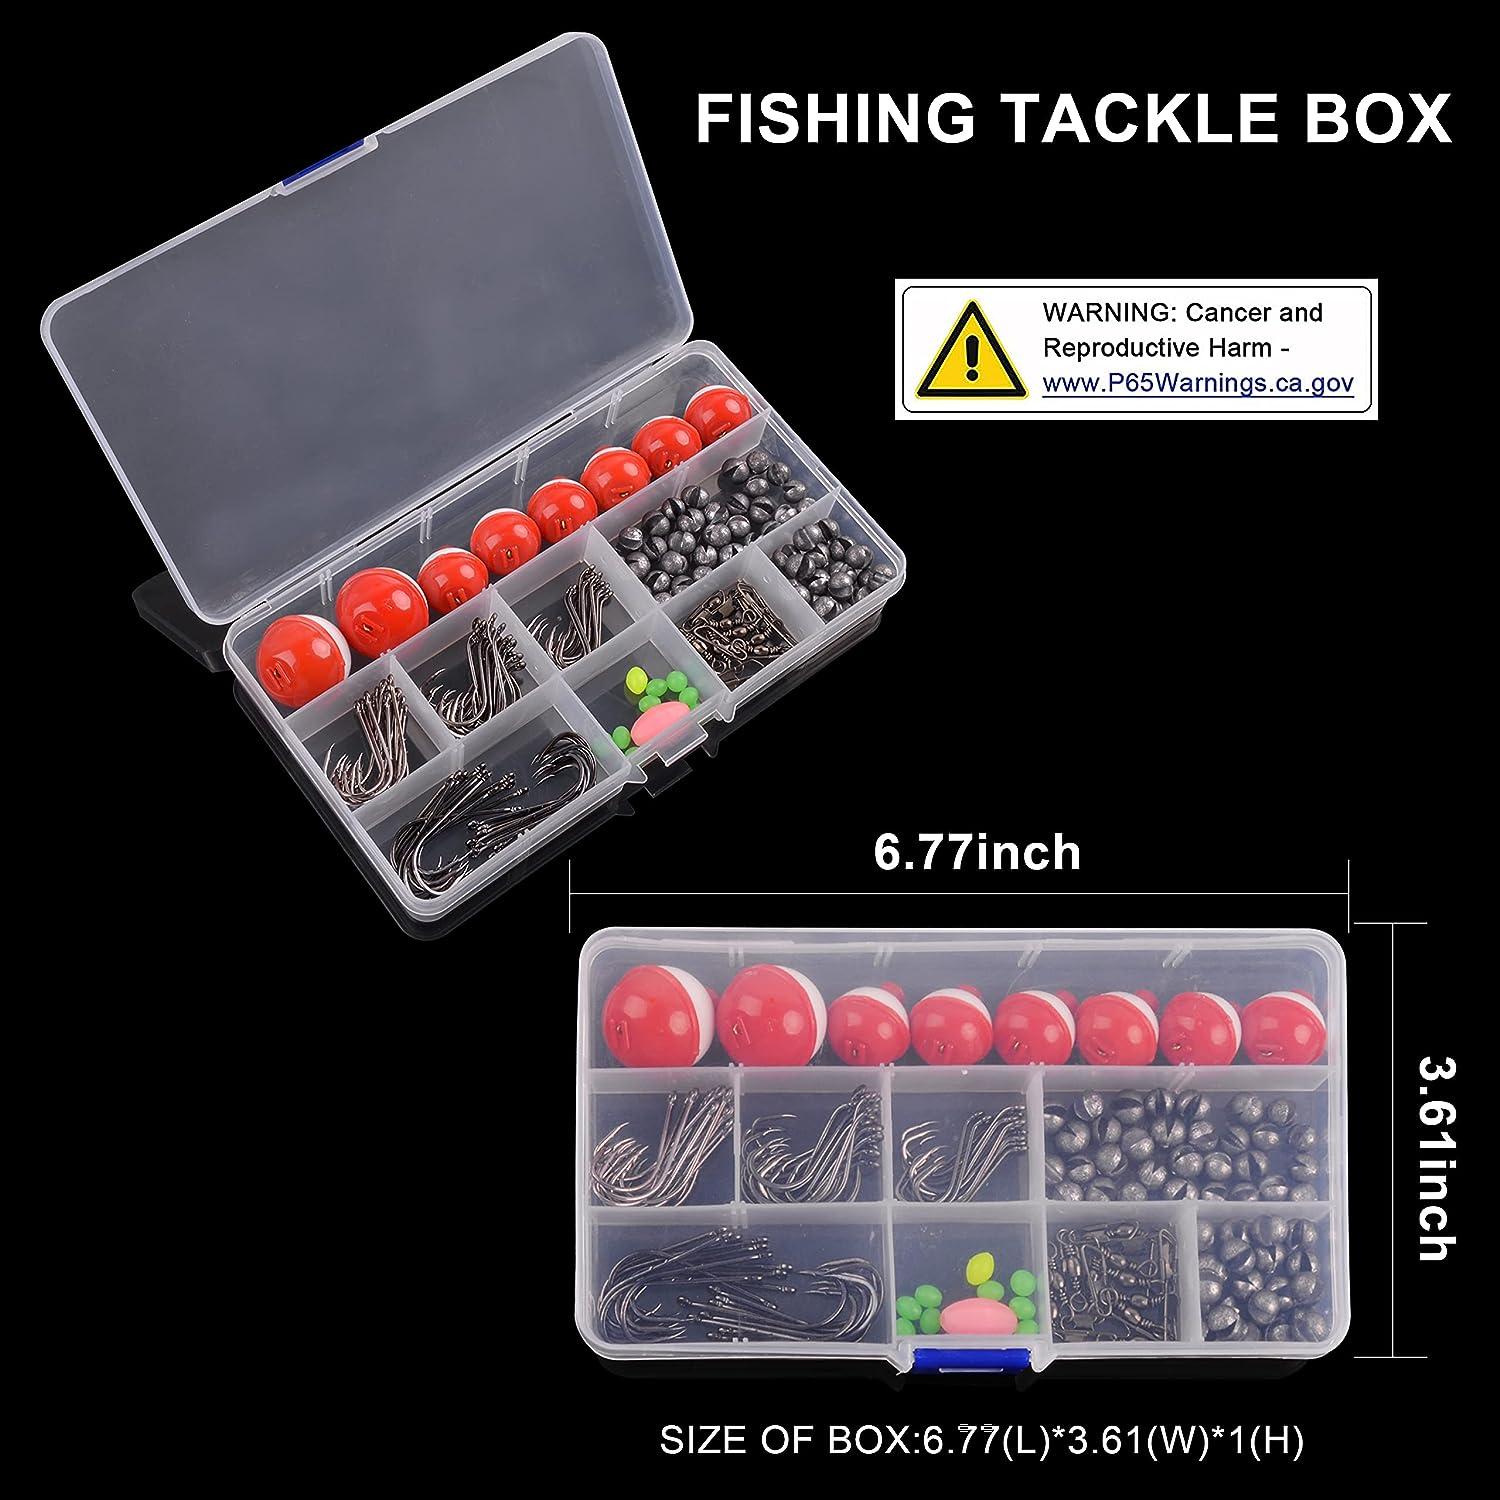  Fishing Lure Set 160 Pieces Carp Fishing Tackle Kit